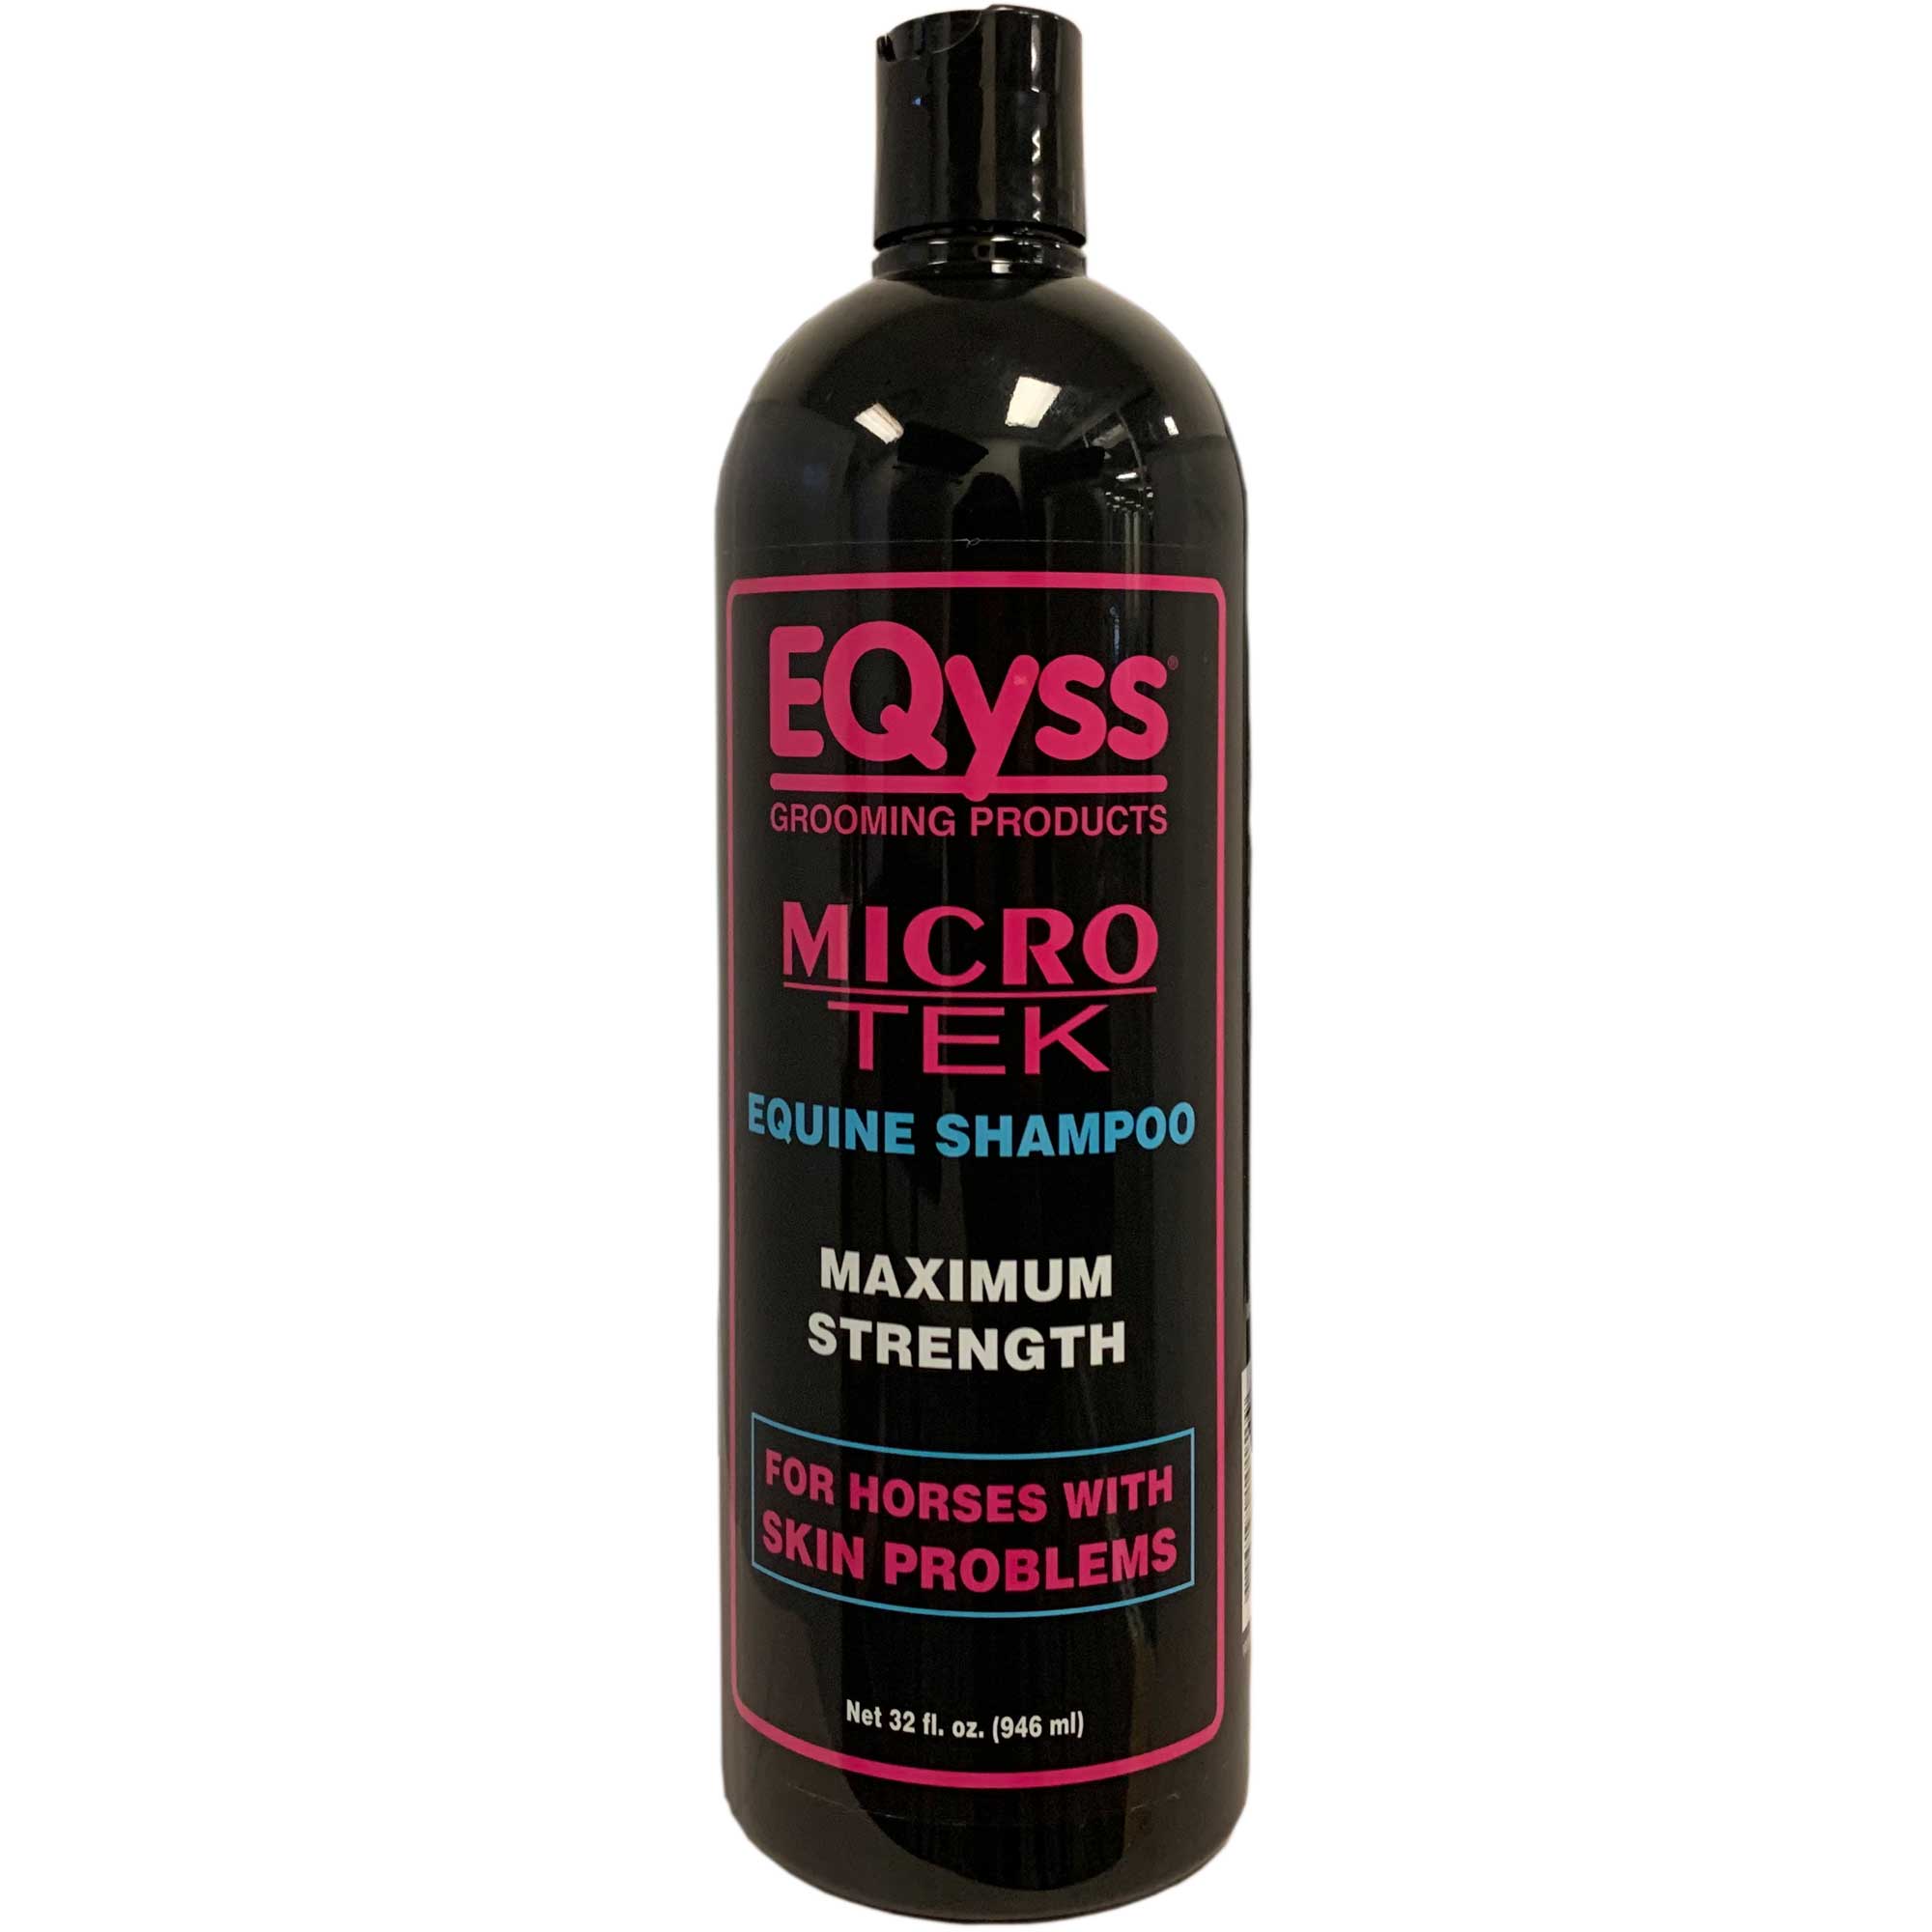 EQyss Micro-Tek Equine Shampoo Usage